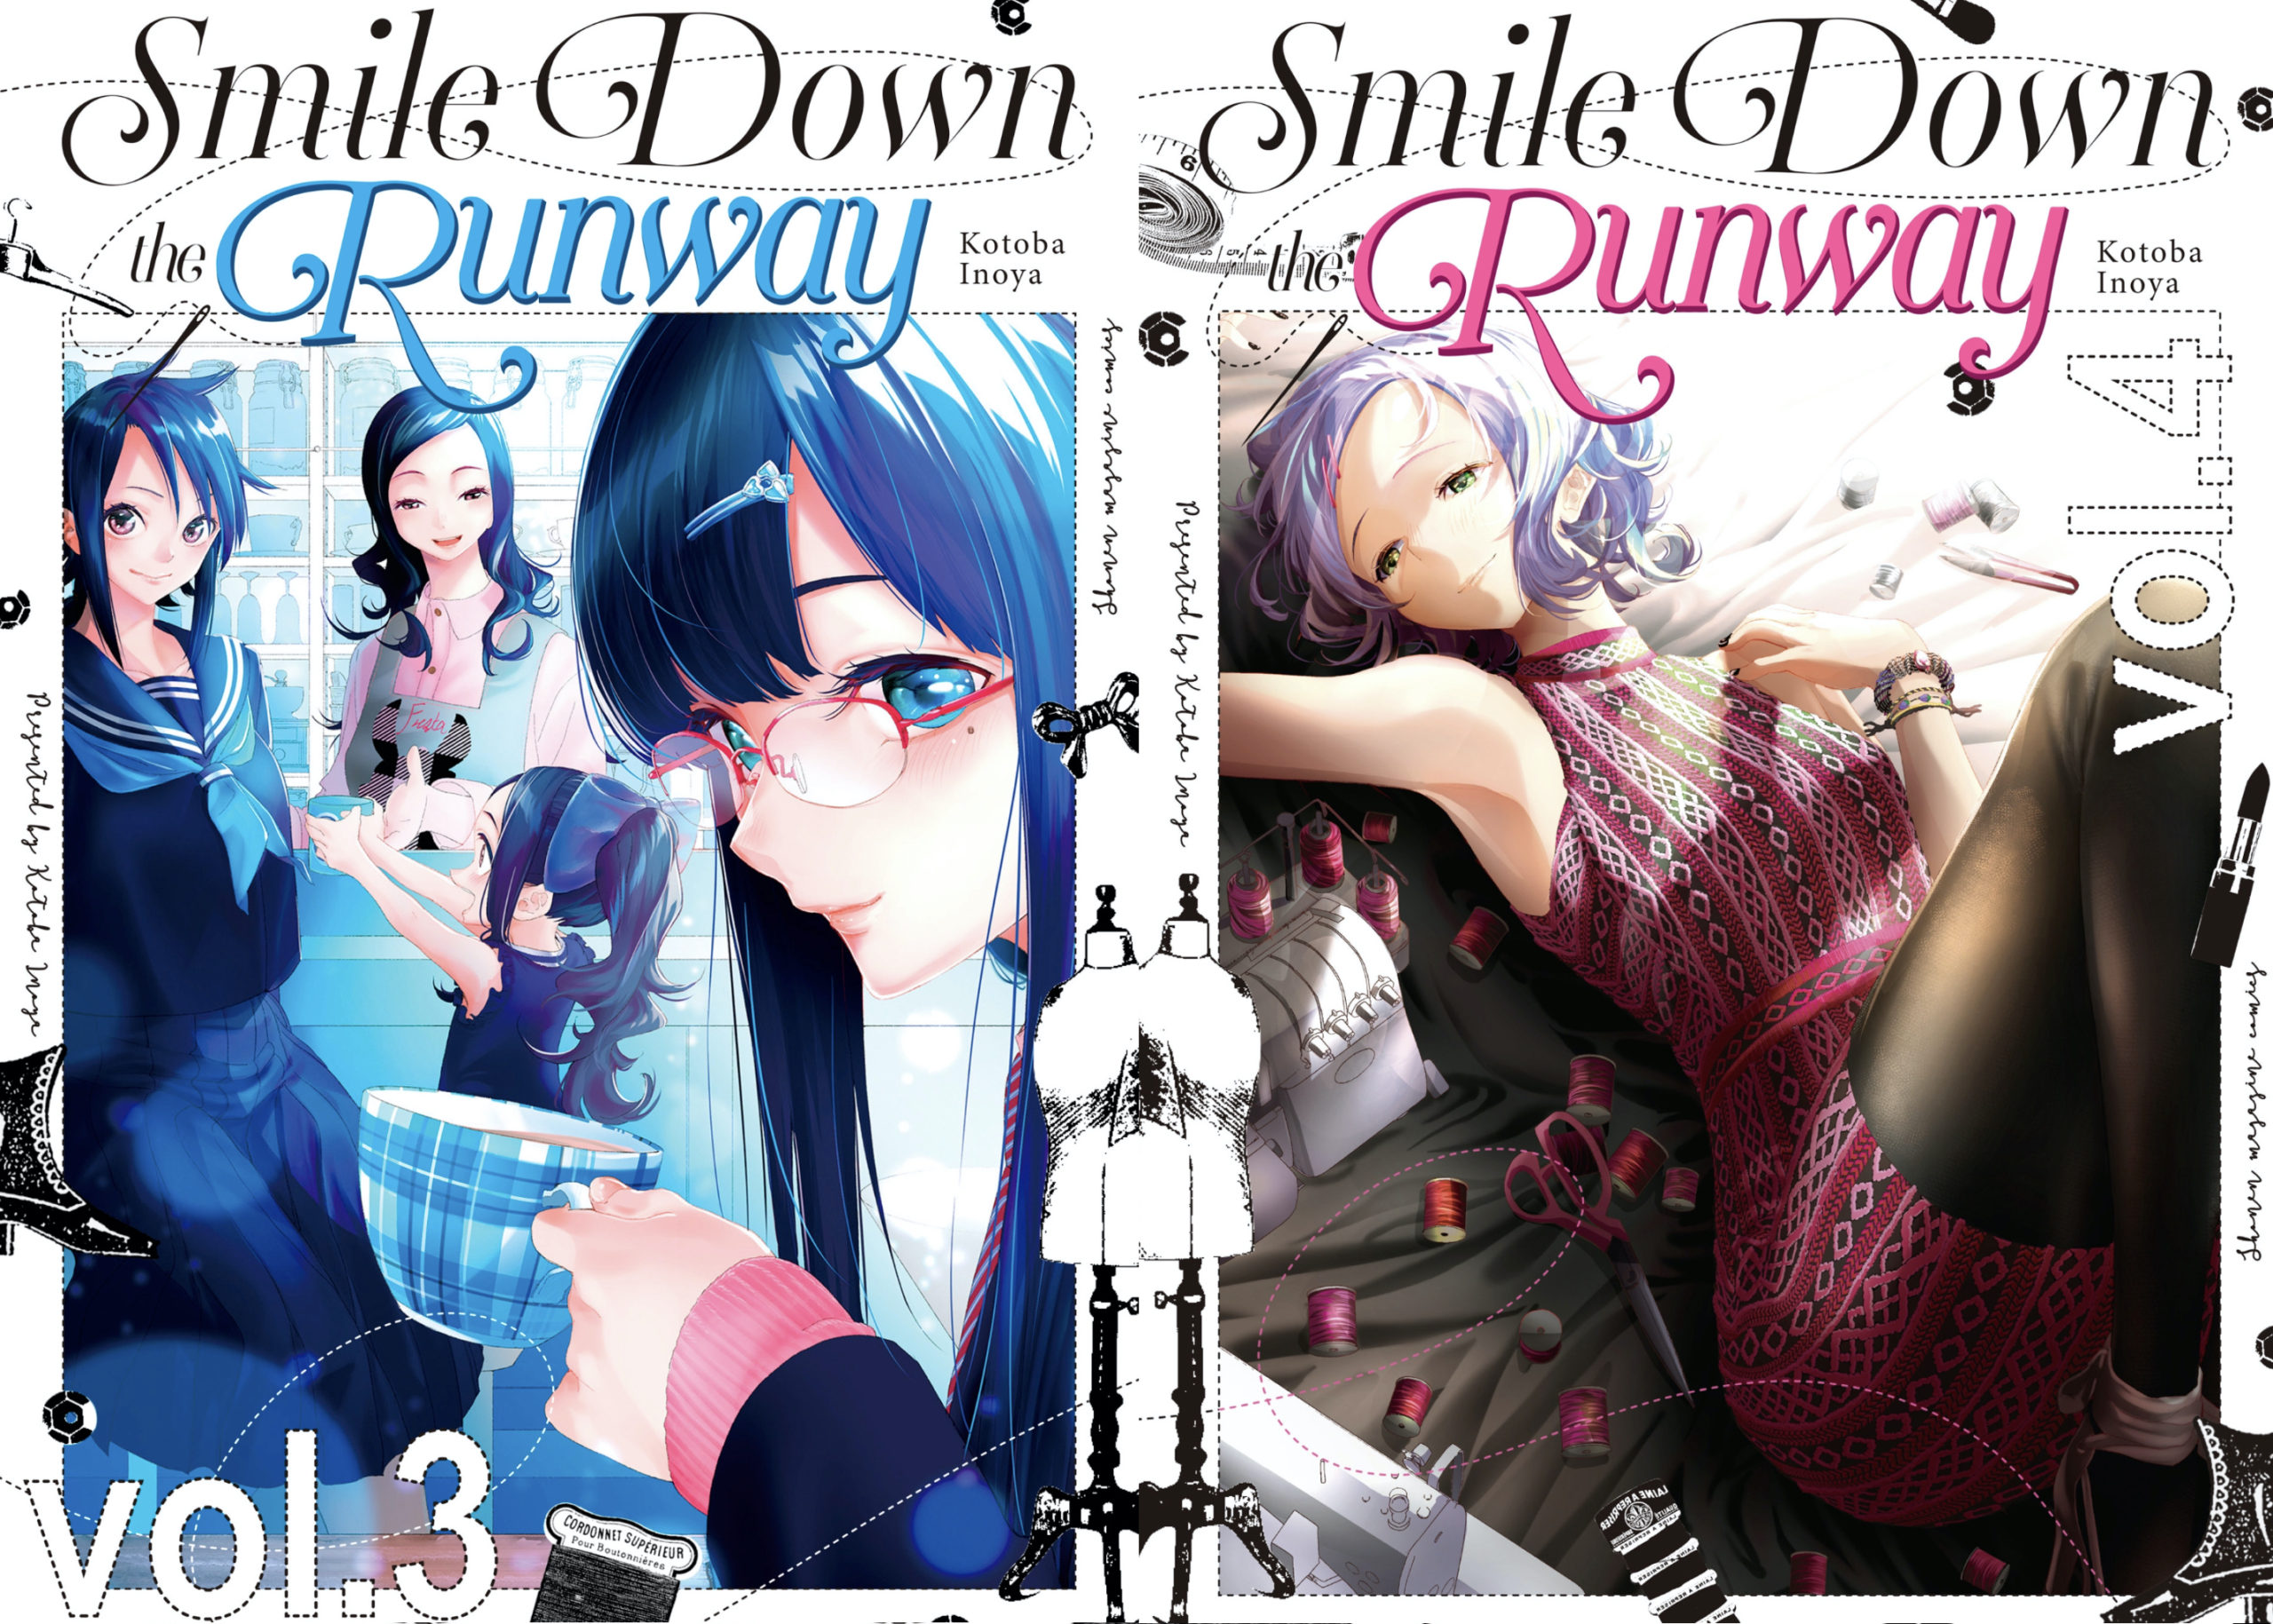 Anime Like Smile Down the Runway